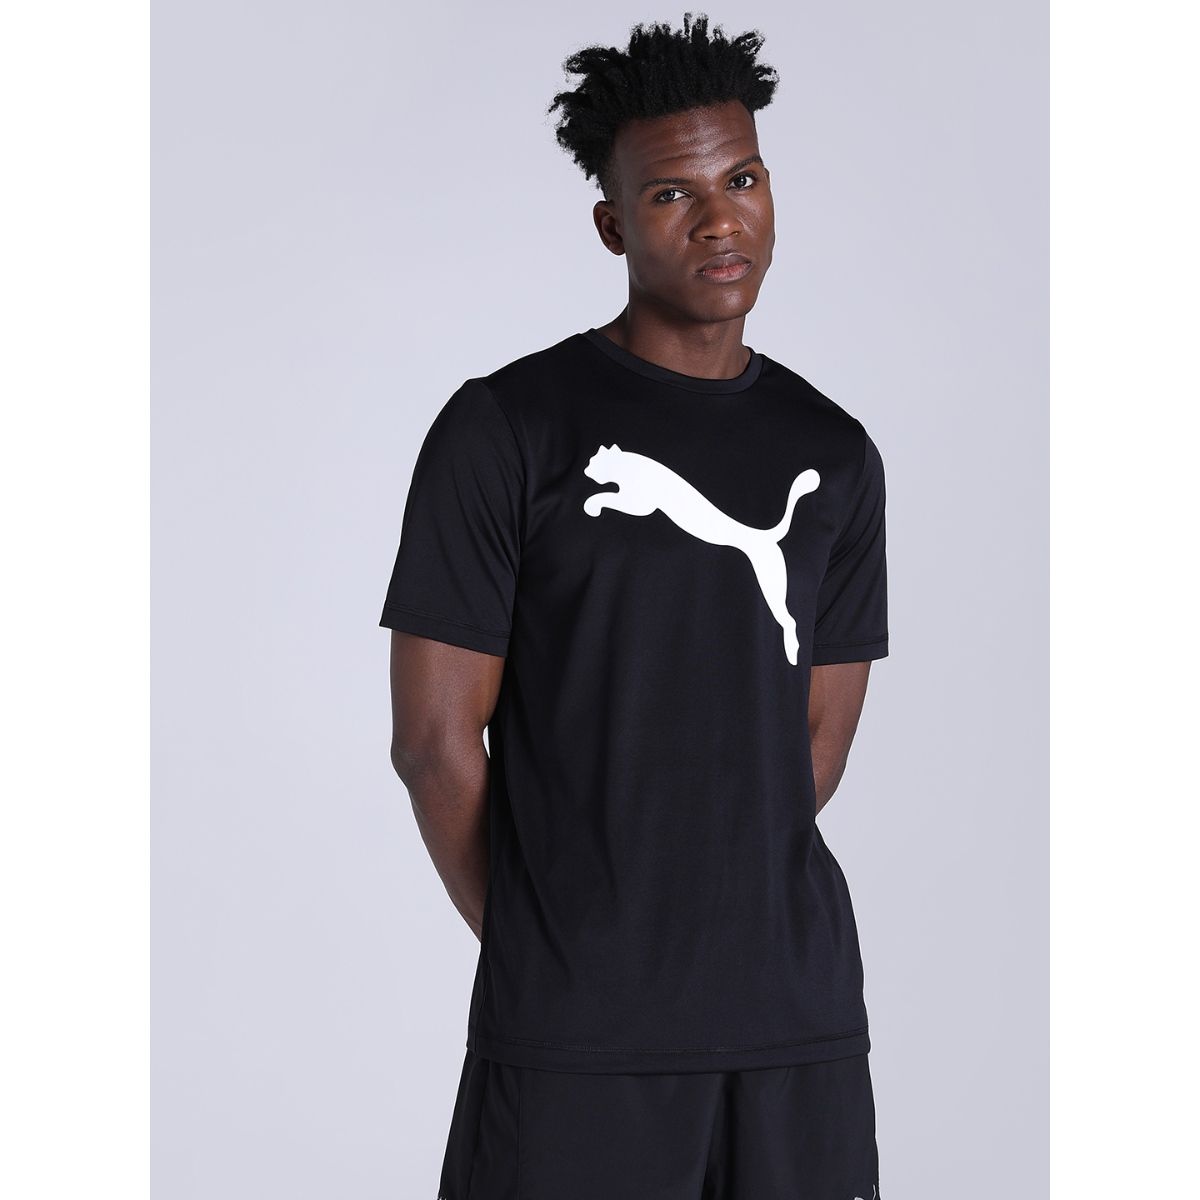 Buy Men Puma White Printed Essentials+ Big Logo T-Shirt From Fancode Shop.